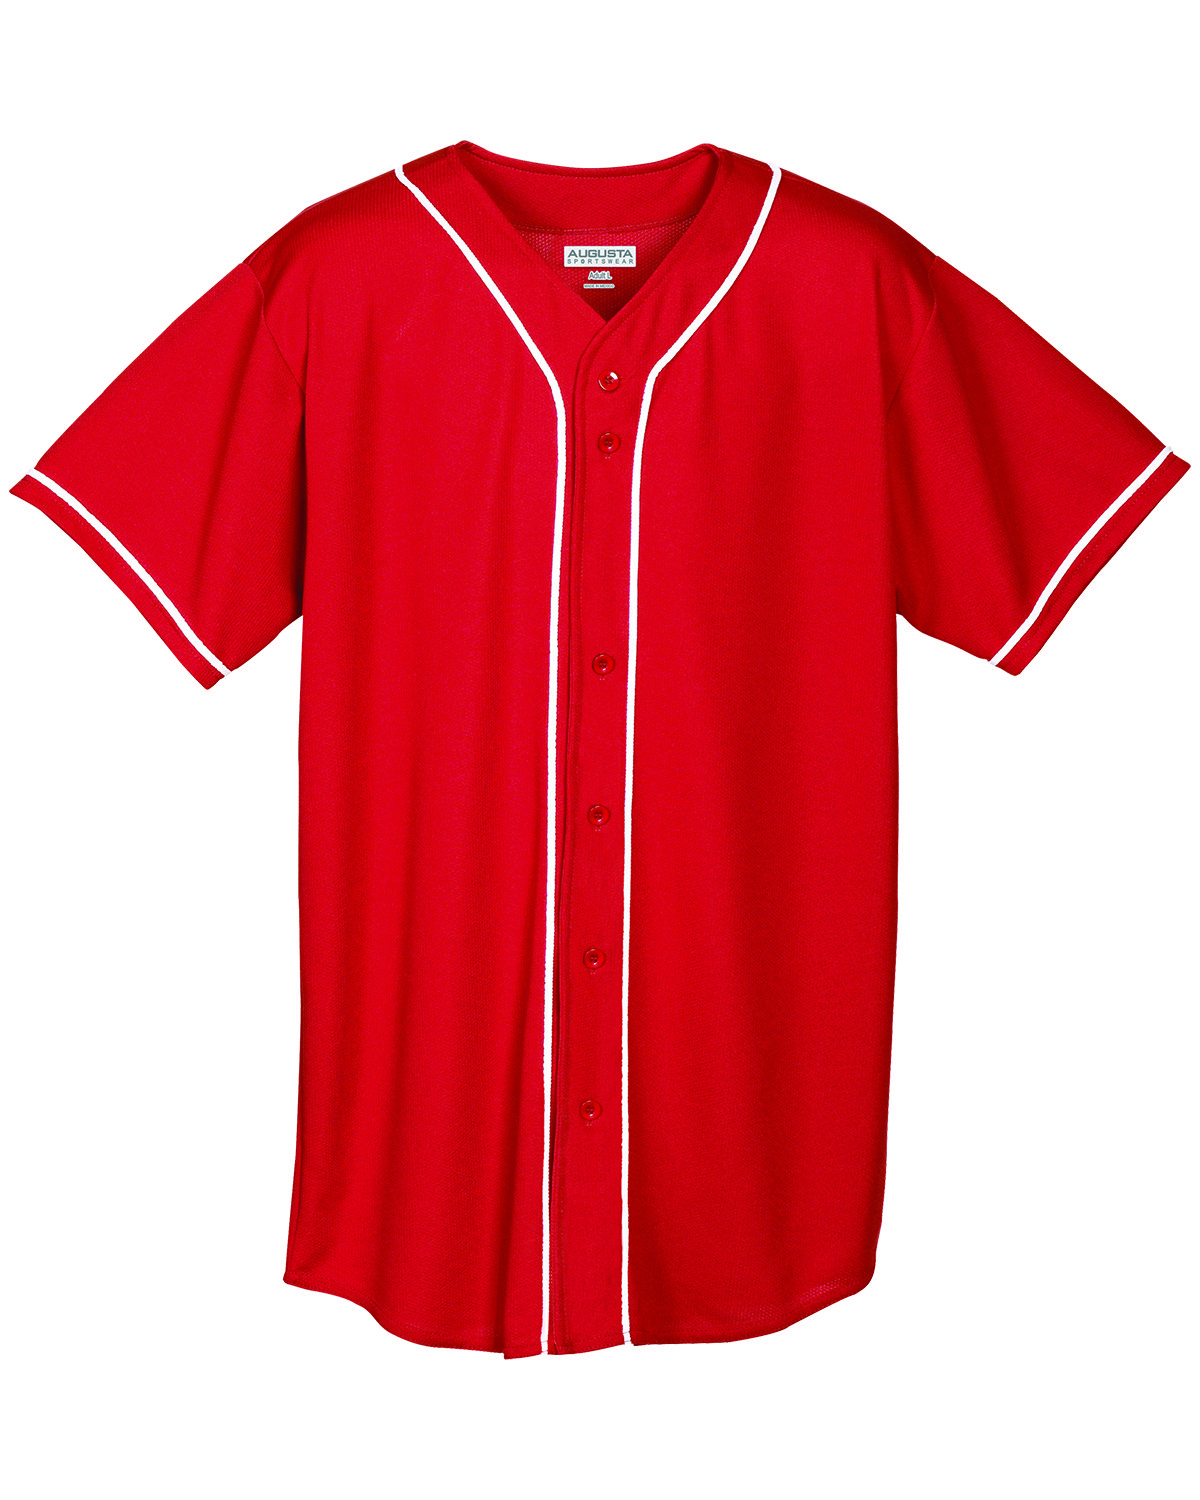 plain maroon baseball jersey